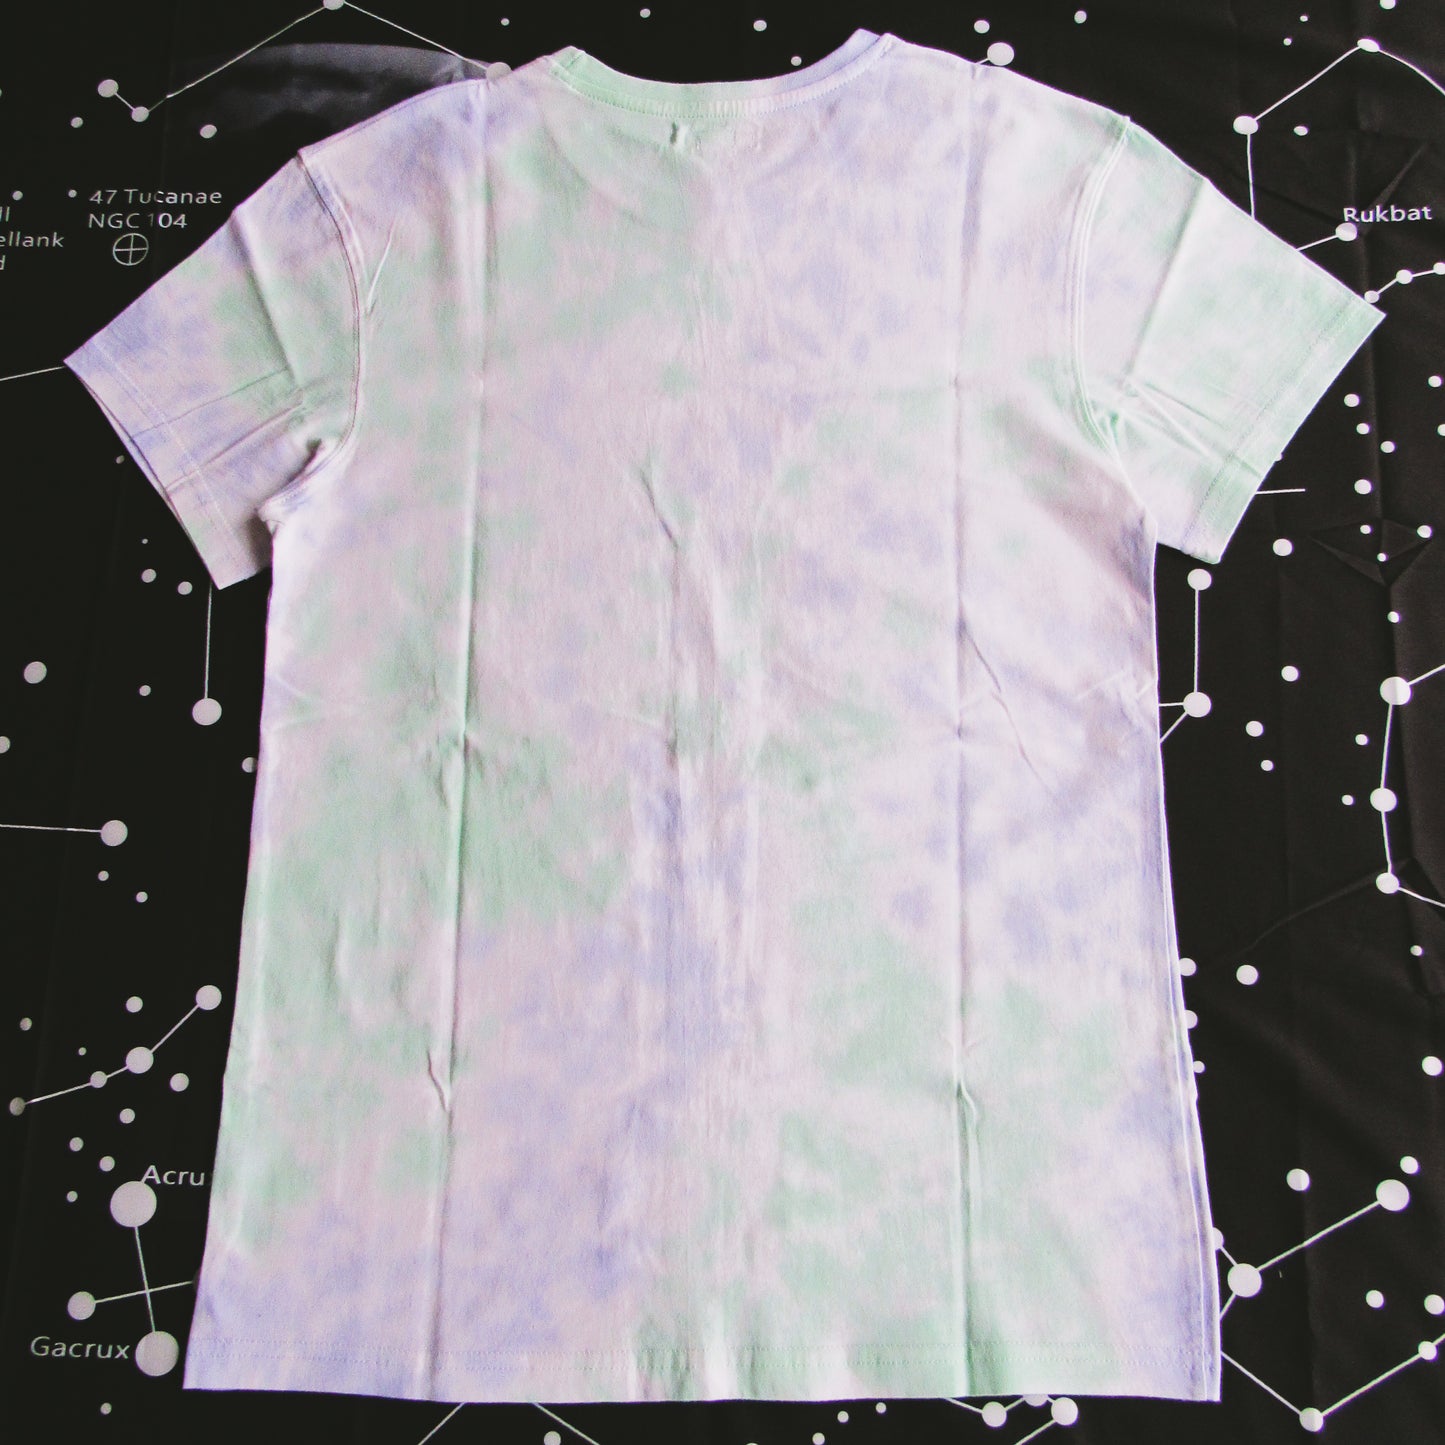 Grass Green & Purple Crumple Tie Dye T Shirt